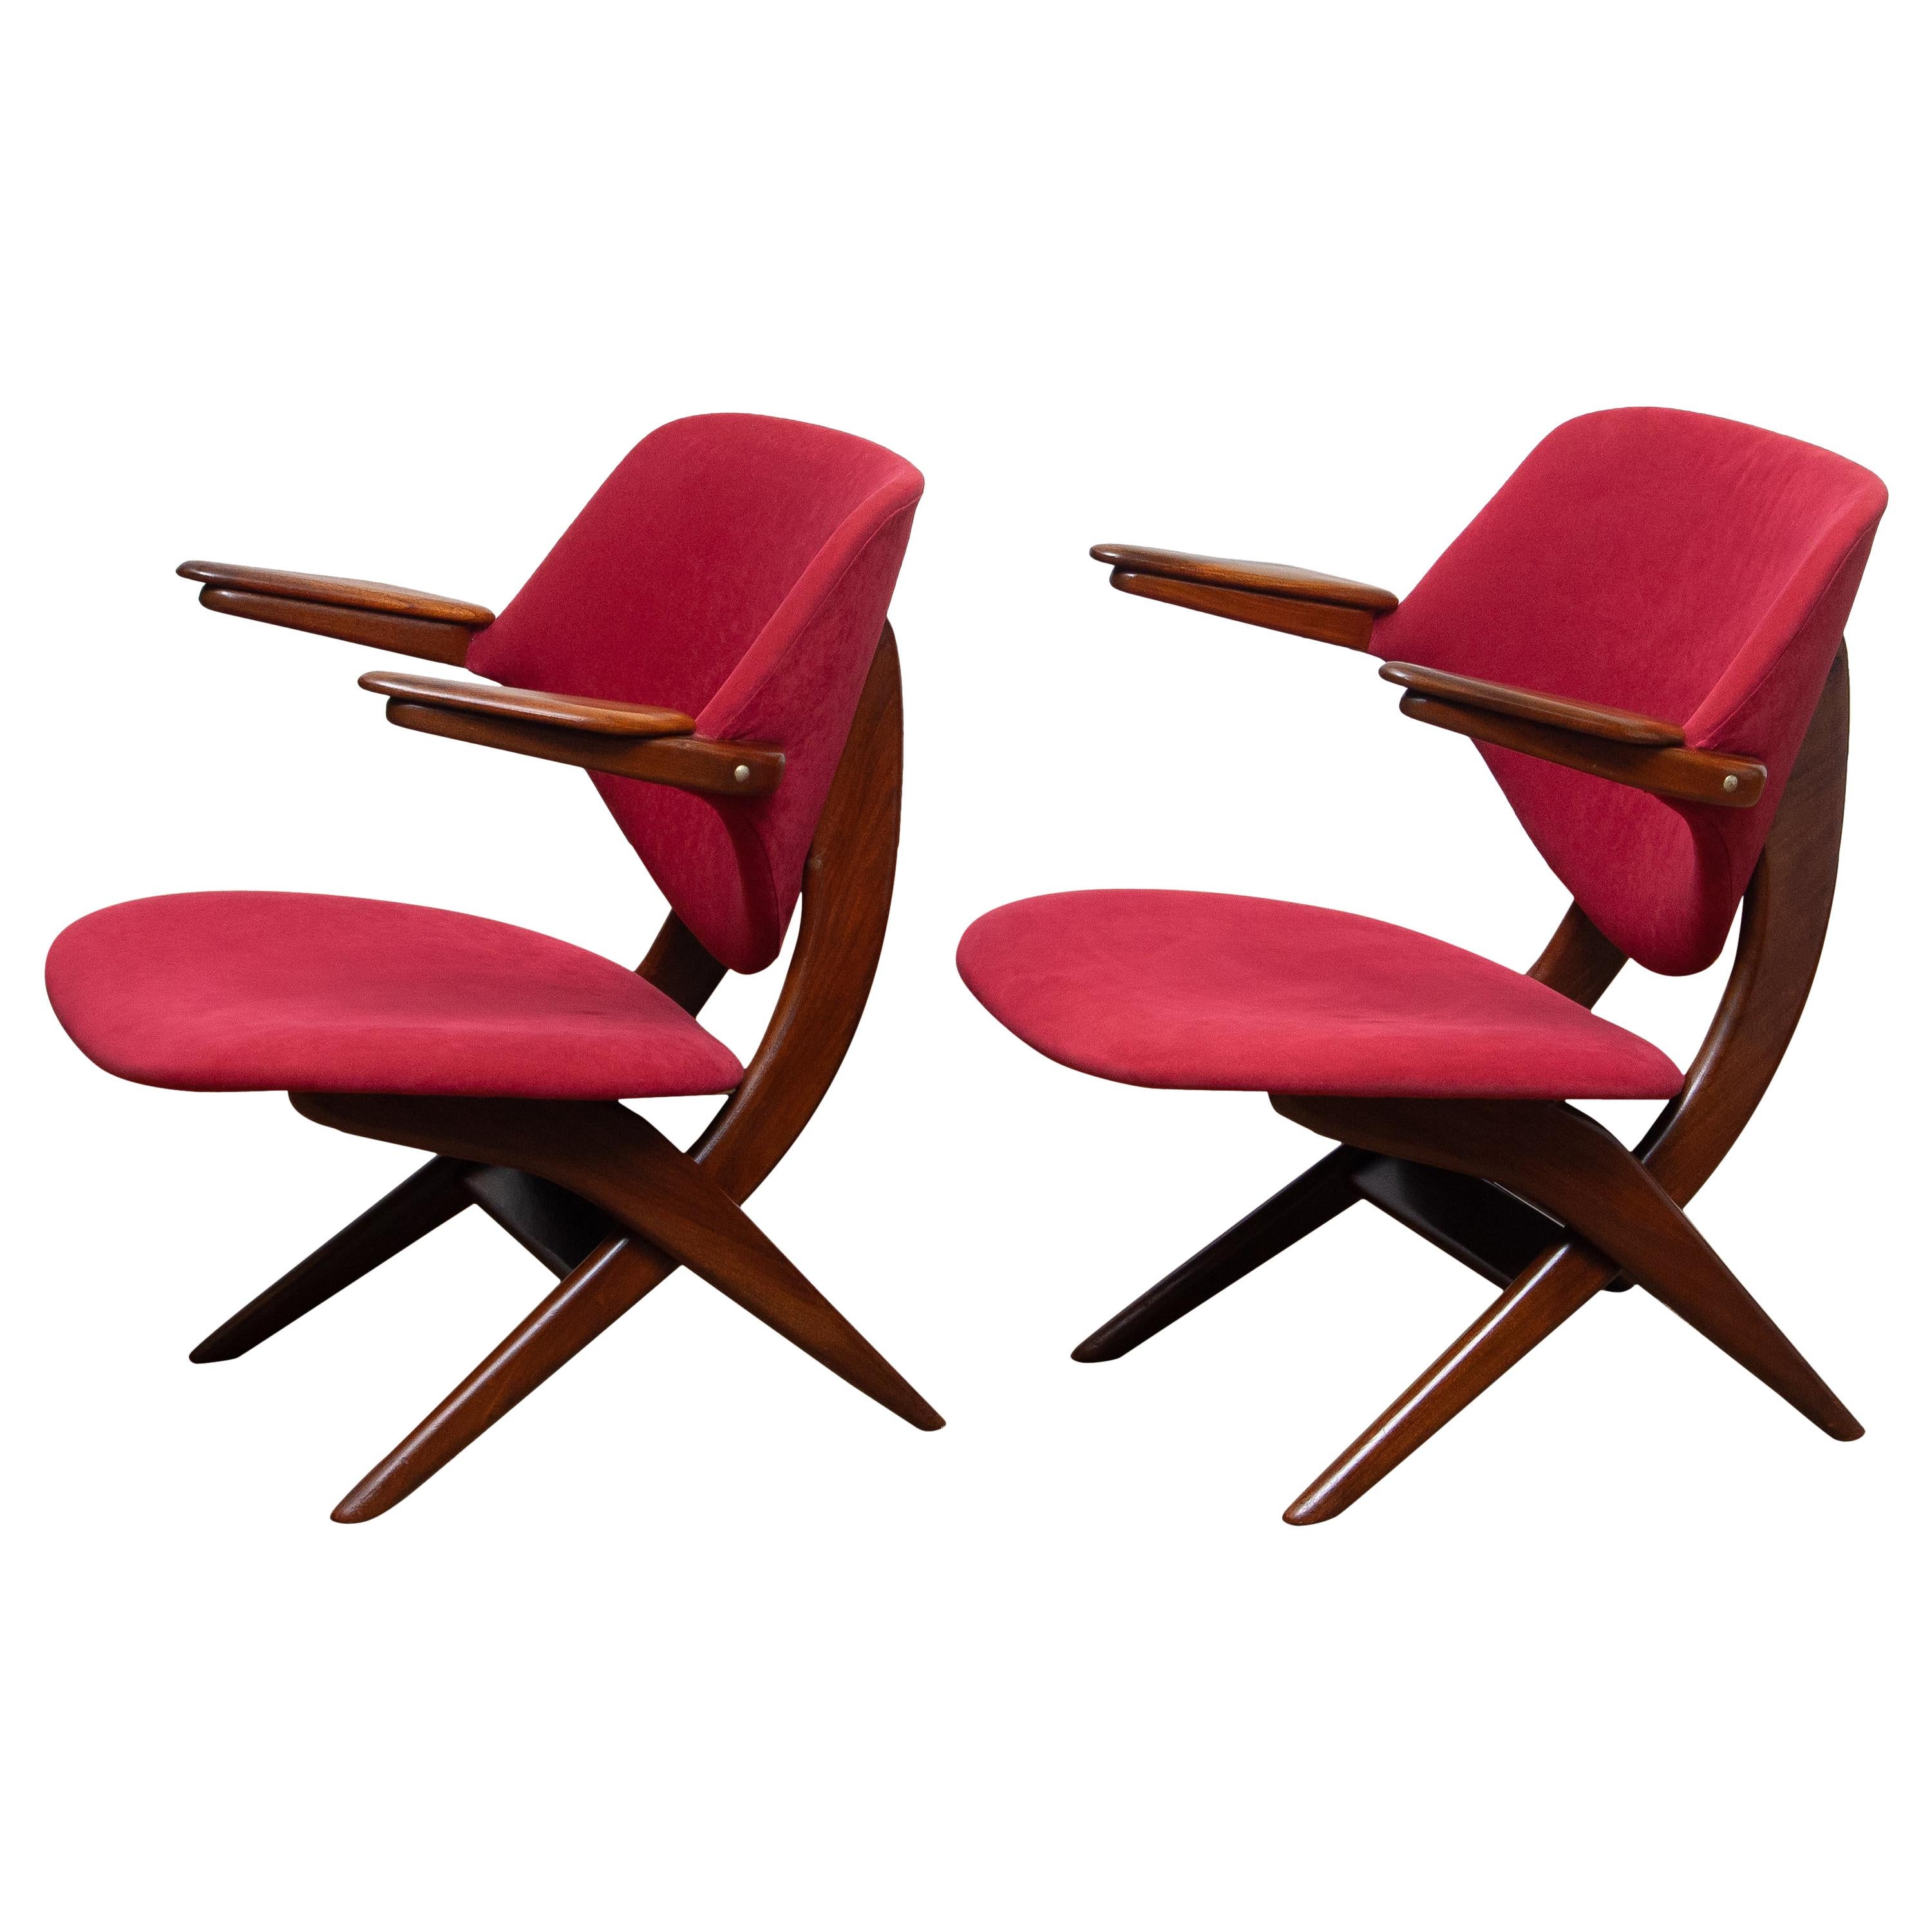 1950s, Set of Two Teak Lounge/Easy Chairs by Louis Van Teeffelen for Wébé 1